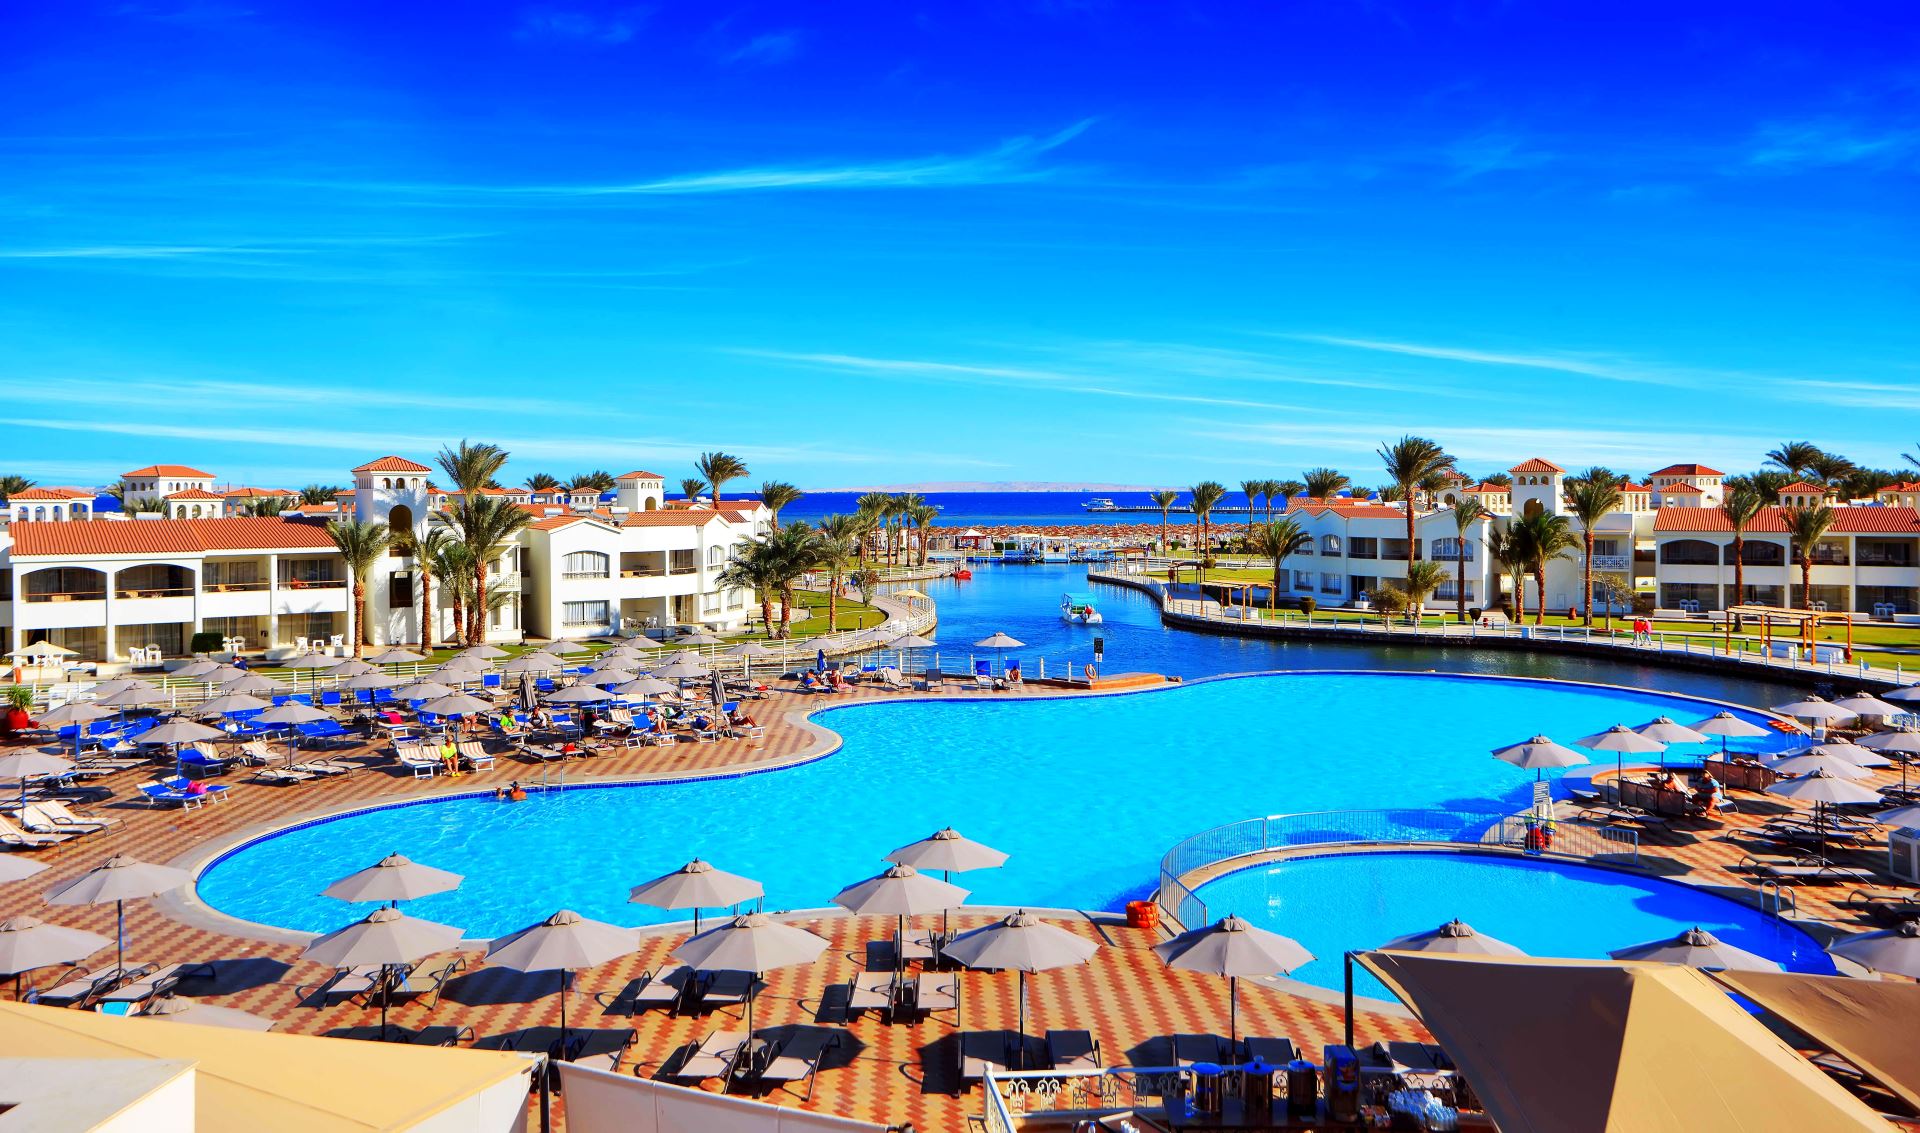 Dana Beach Resort - Hurghada Egipt - opis hotelu | TUI Biuro Podróży